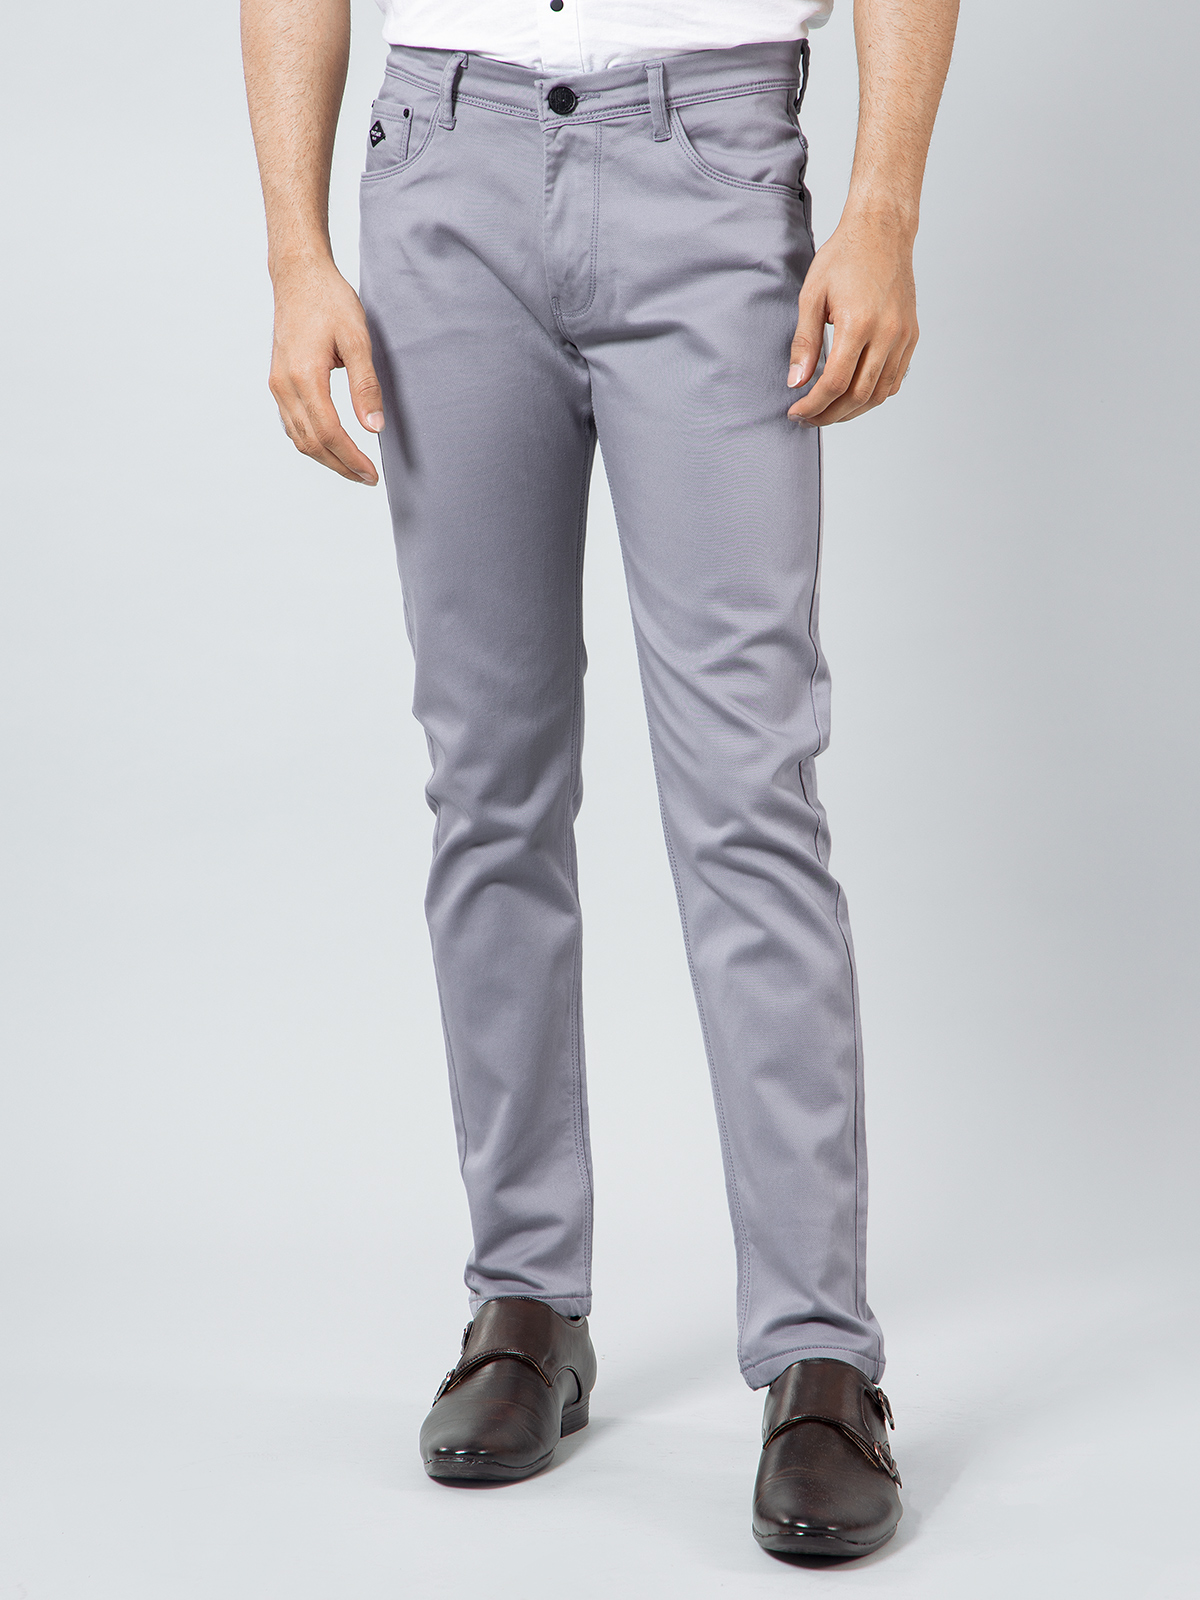 Formal Wear Plain Boys Light Grey Cotton Twill Trouser at Rs 350/piece in  New Delhi